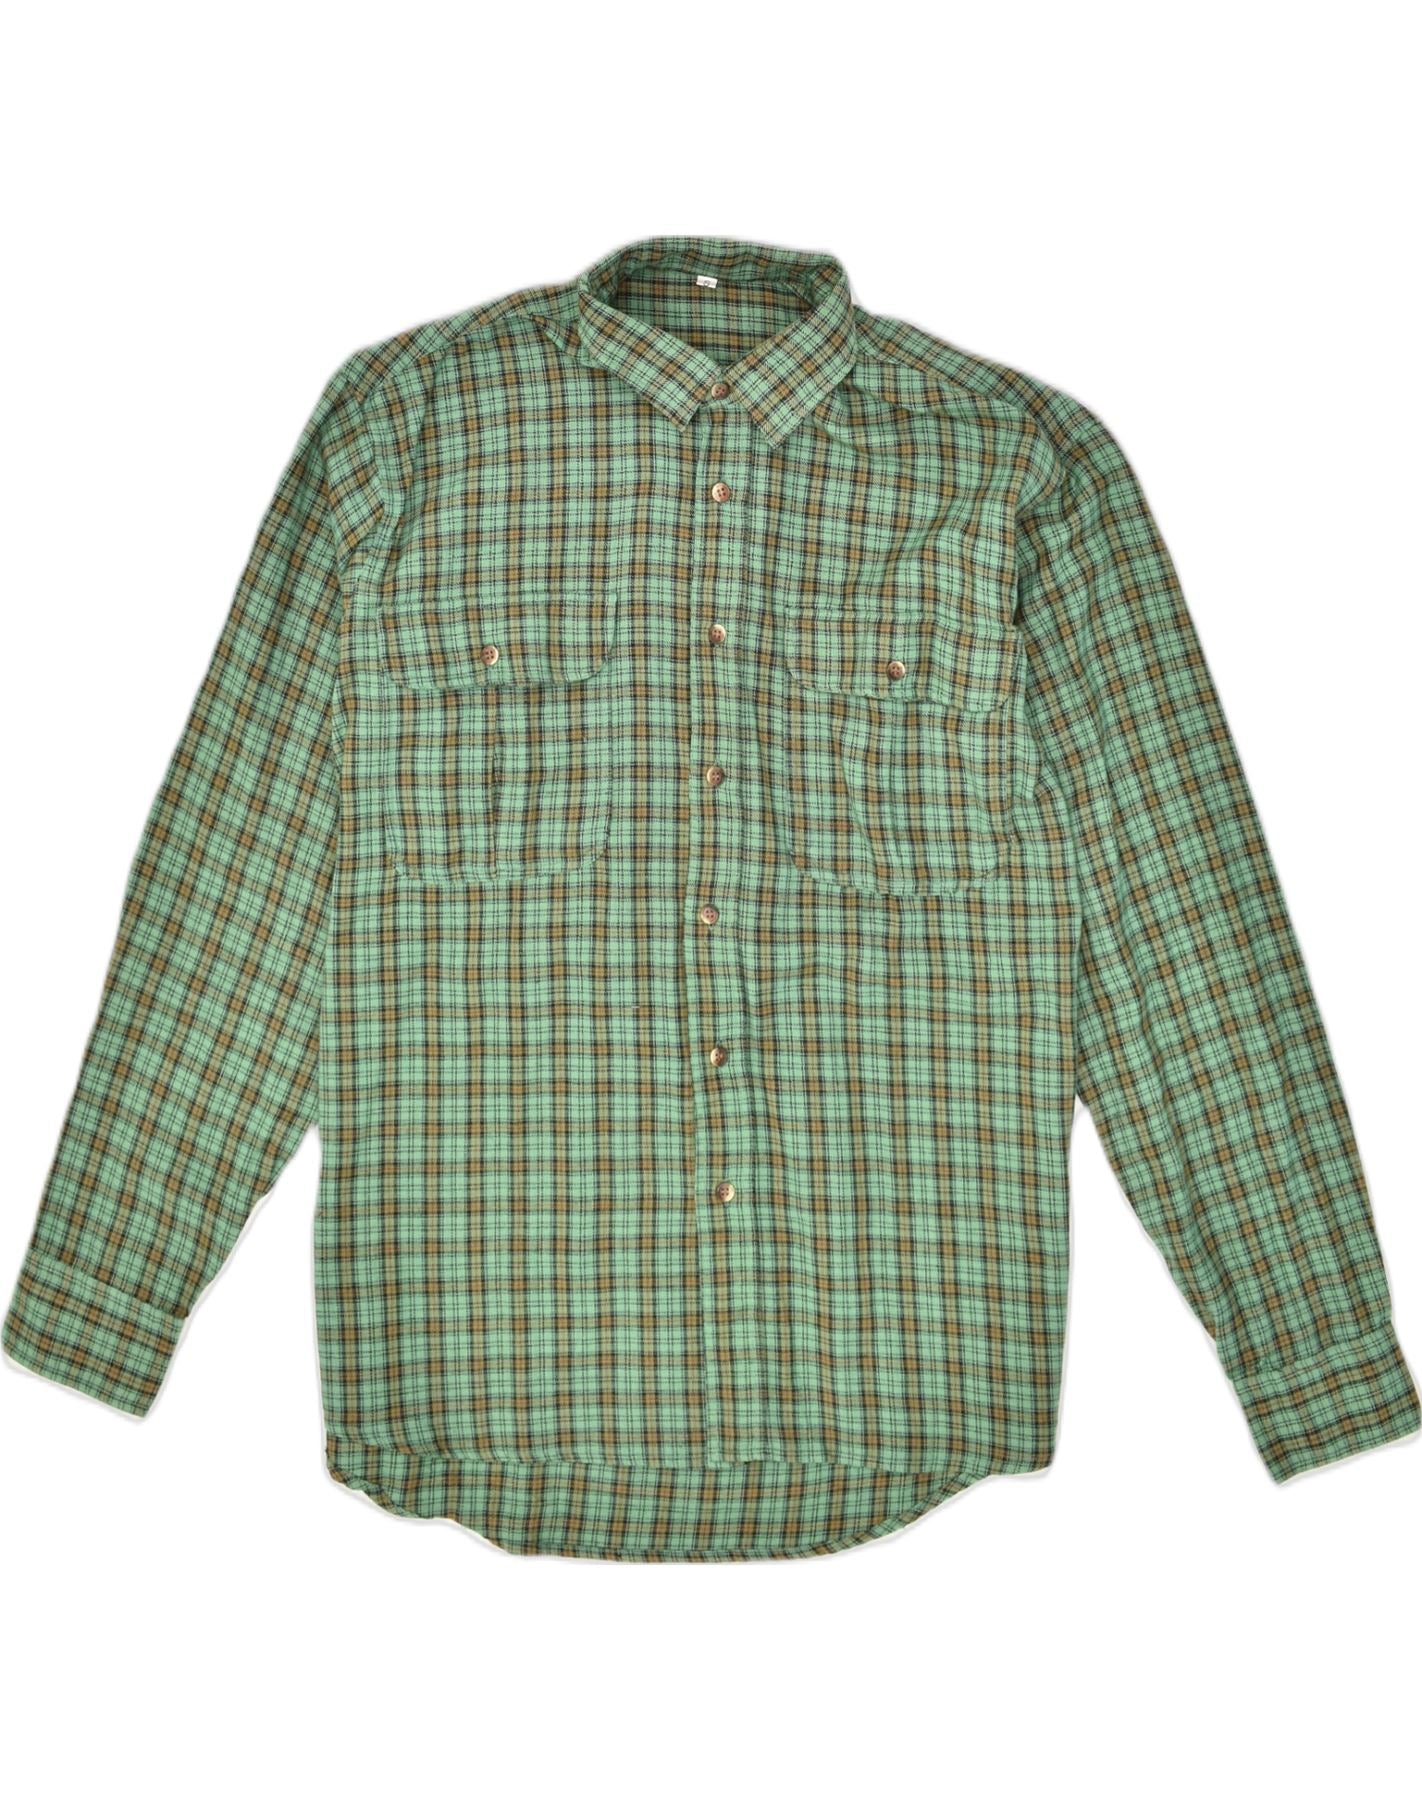 VINTAGE Mens Shirt Small Green Check Cotton